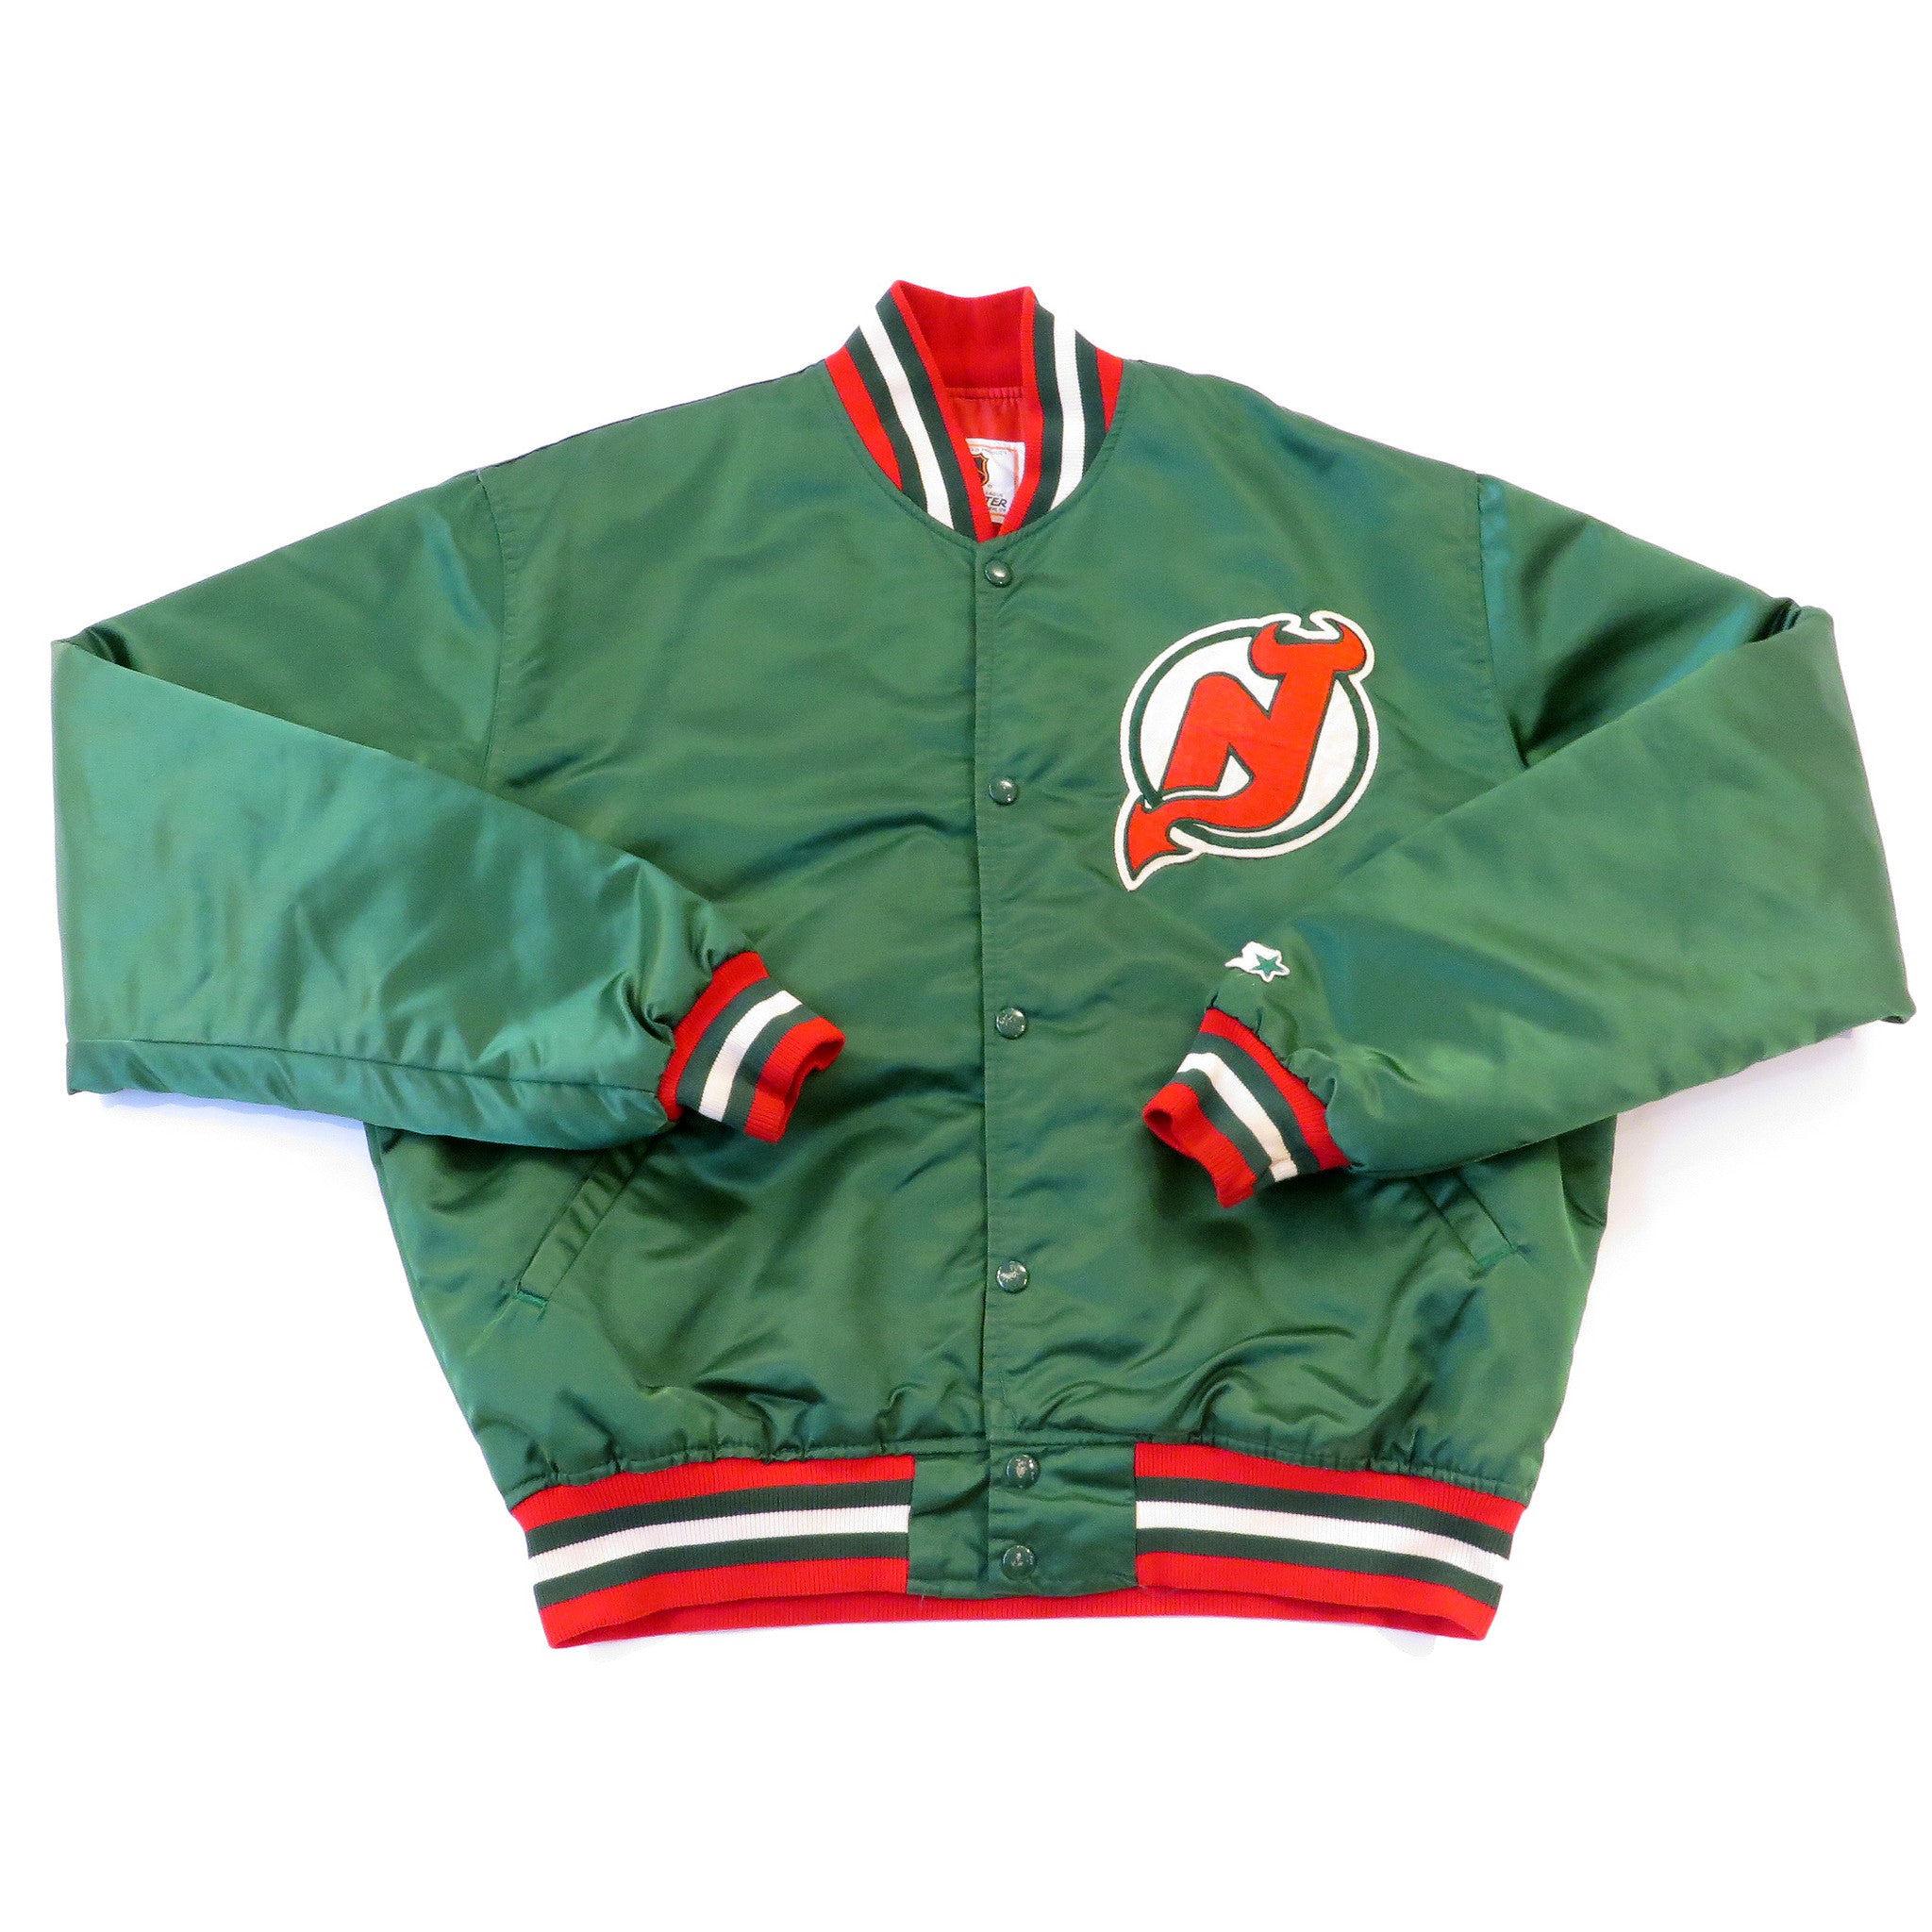 Vintage Starter New Jersey Devils Jacket Sz M